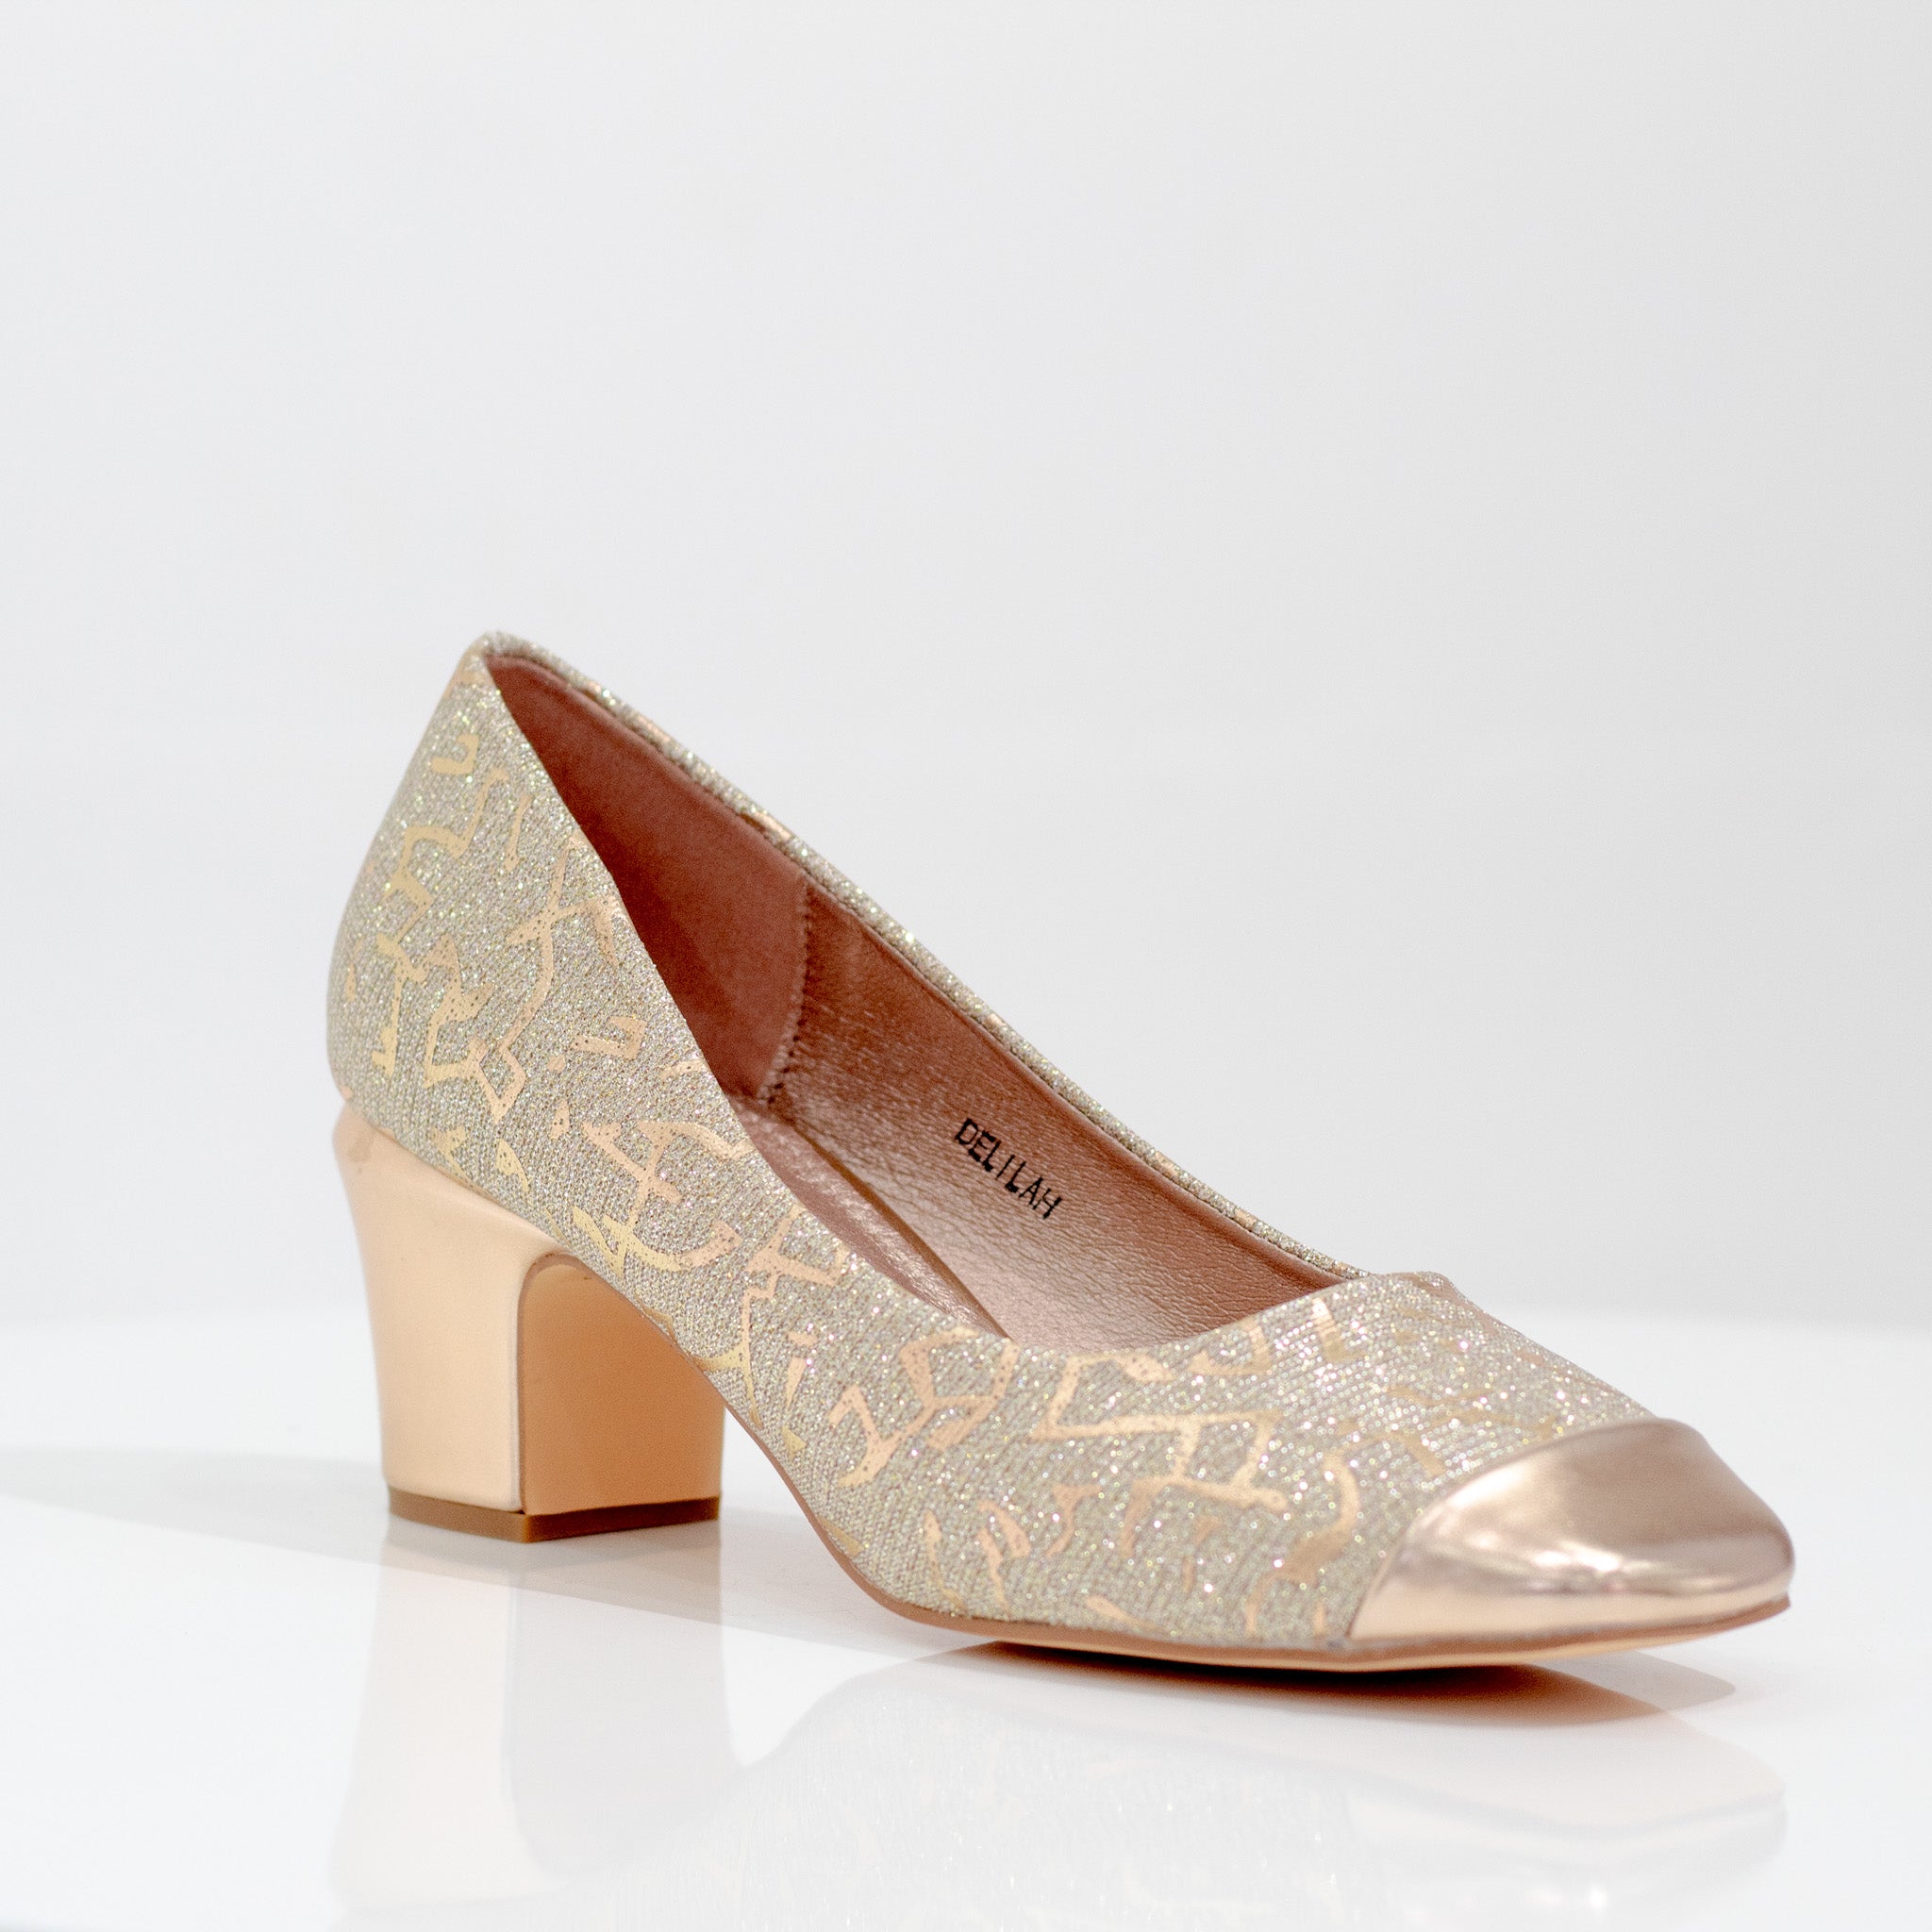 Delilah comfy 5cm heel pointy court shoe